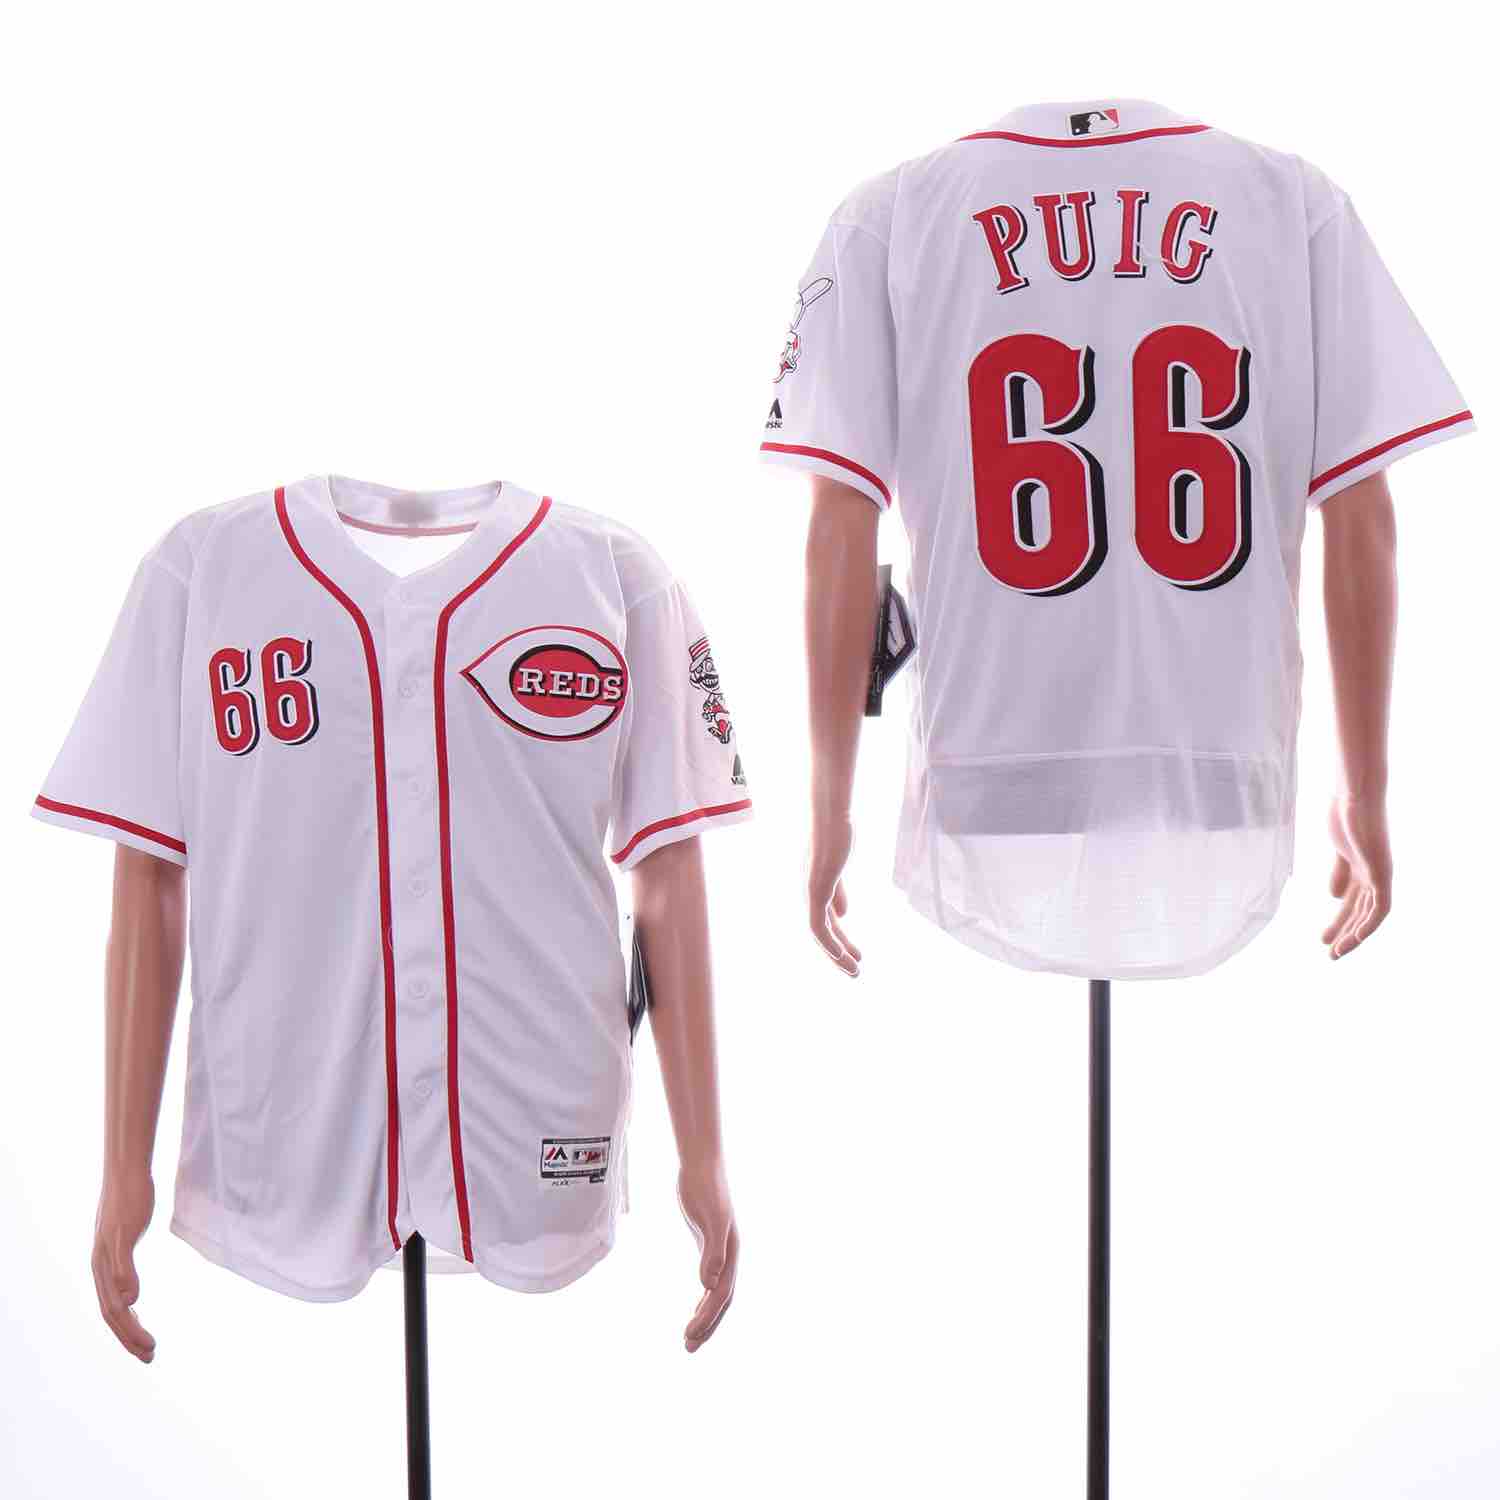 MLB Cincinnati Reds #66 Puig White Jersey